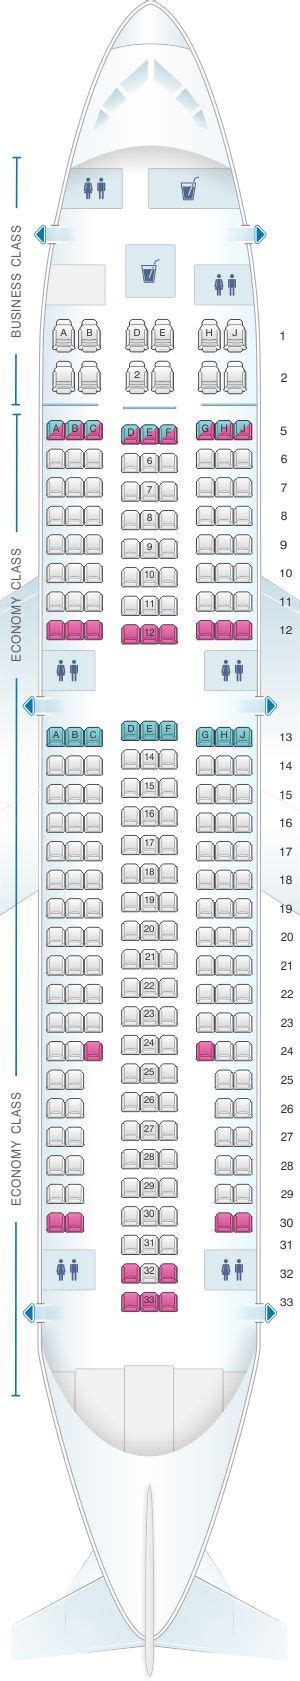 Seat Map White Airways Airbus A310 Hainan Airlines Air China